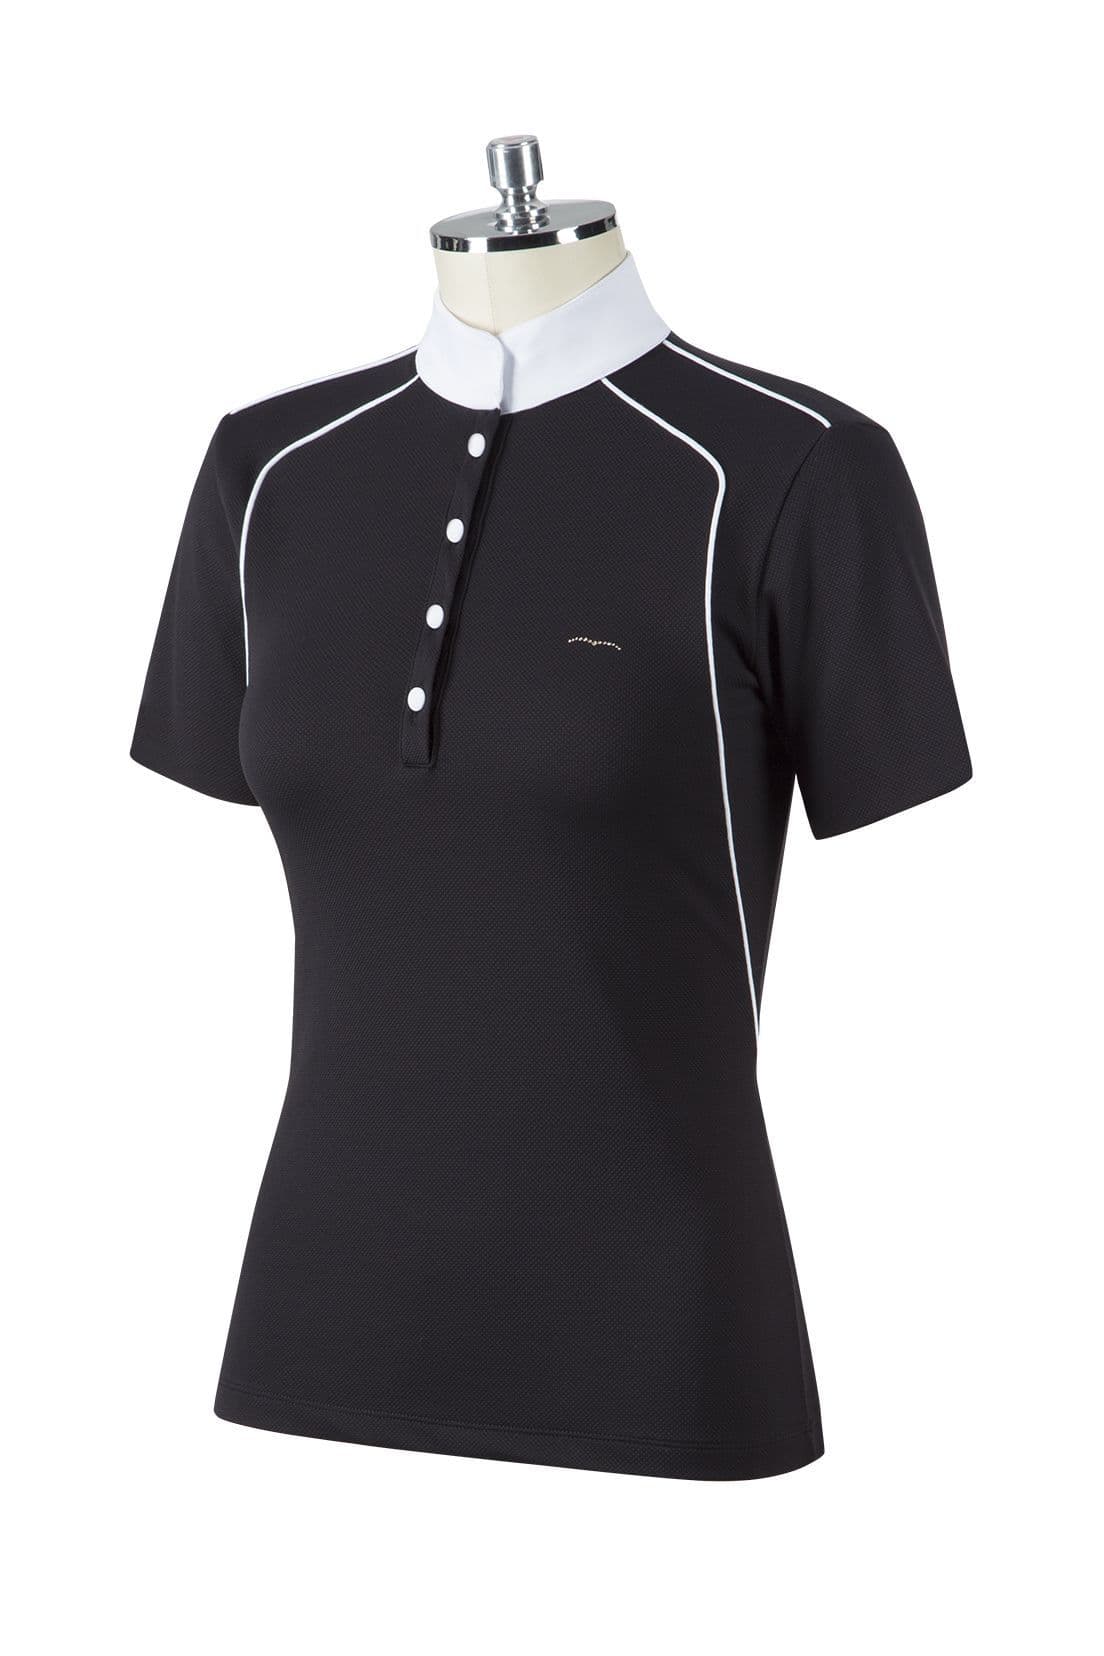 Animo Bakari Ladies Competition Shirt in Black - IT40